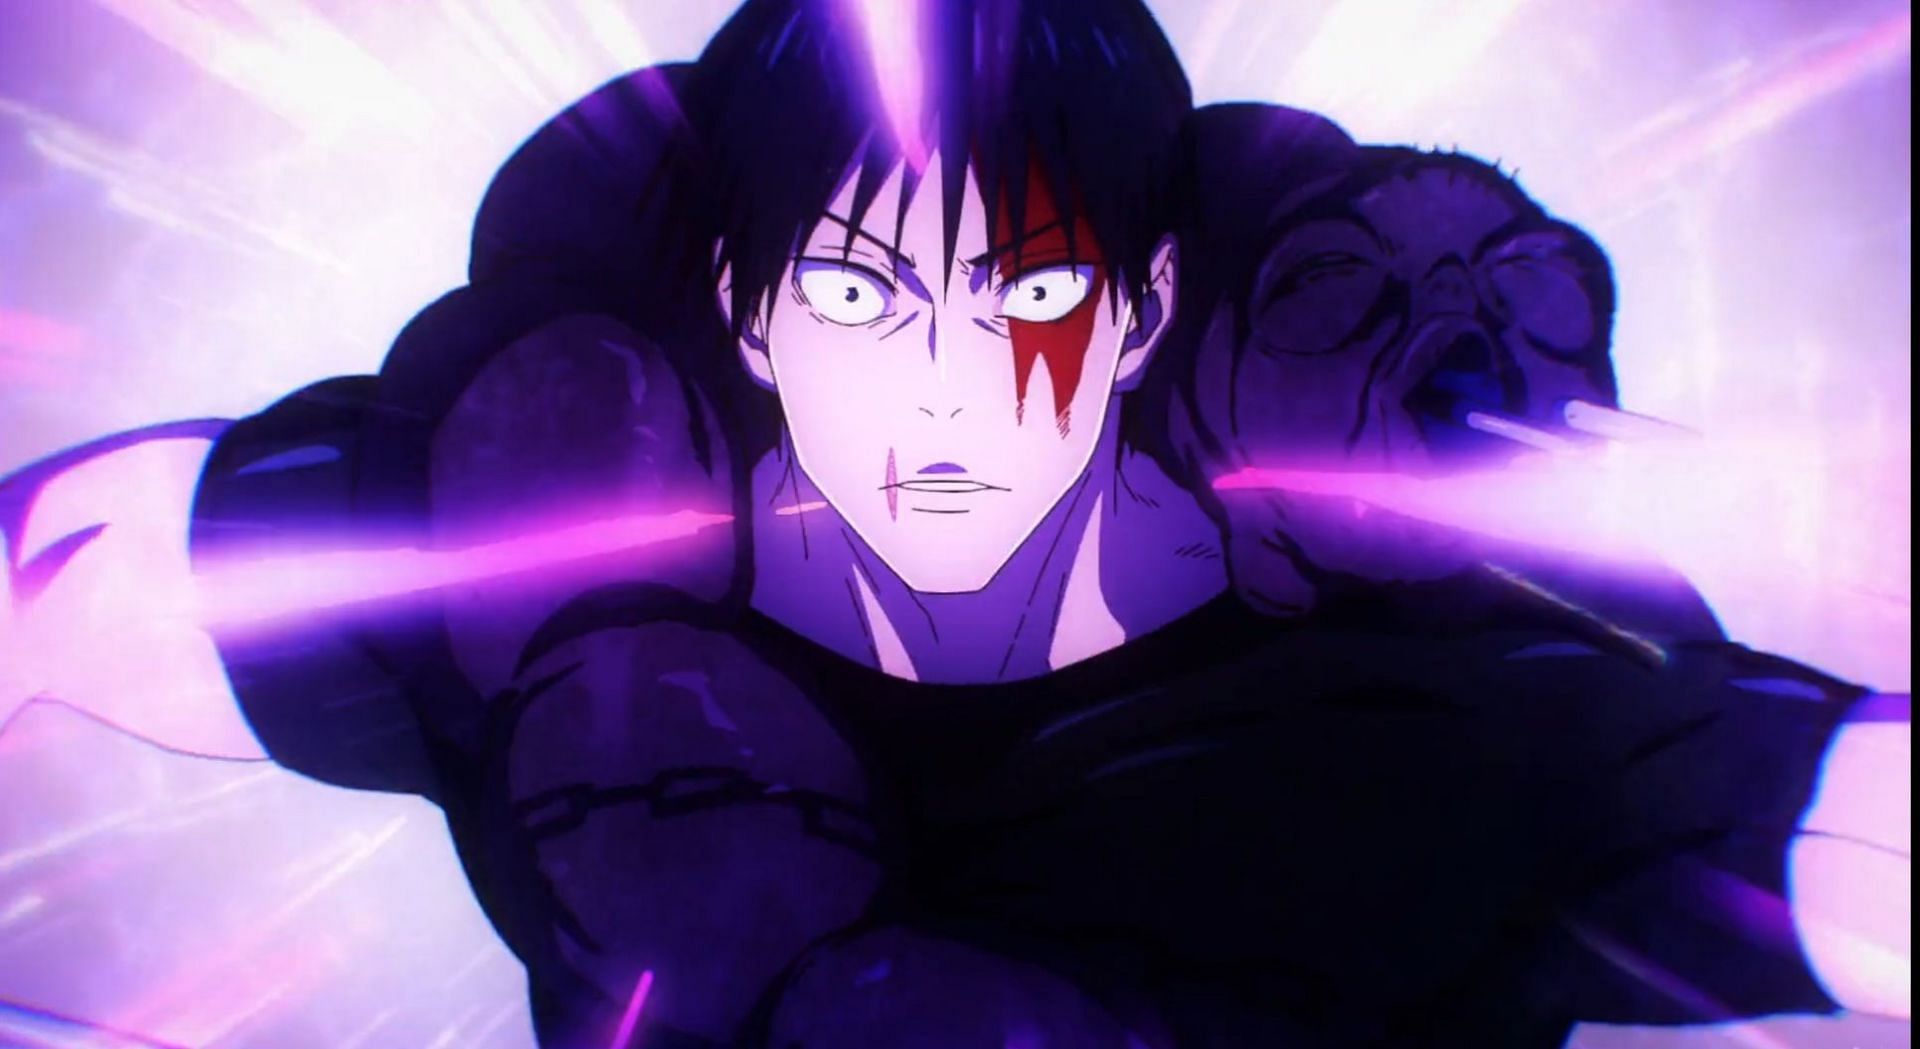 Toji being hit by Hollow Purple in Jujutsu Kaisen Season 2 Episode 4 (Image via MAPPA)